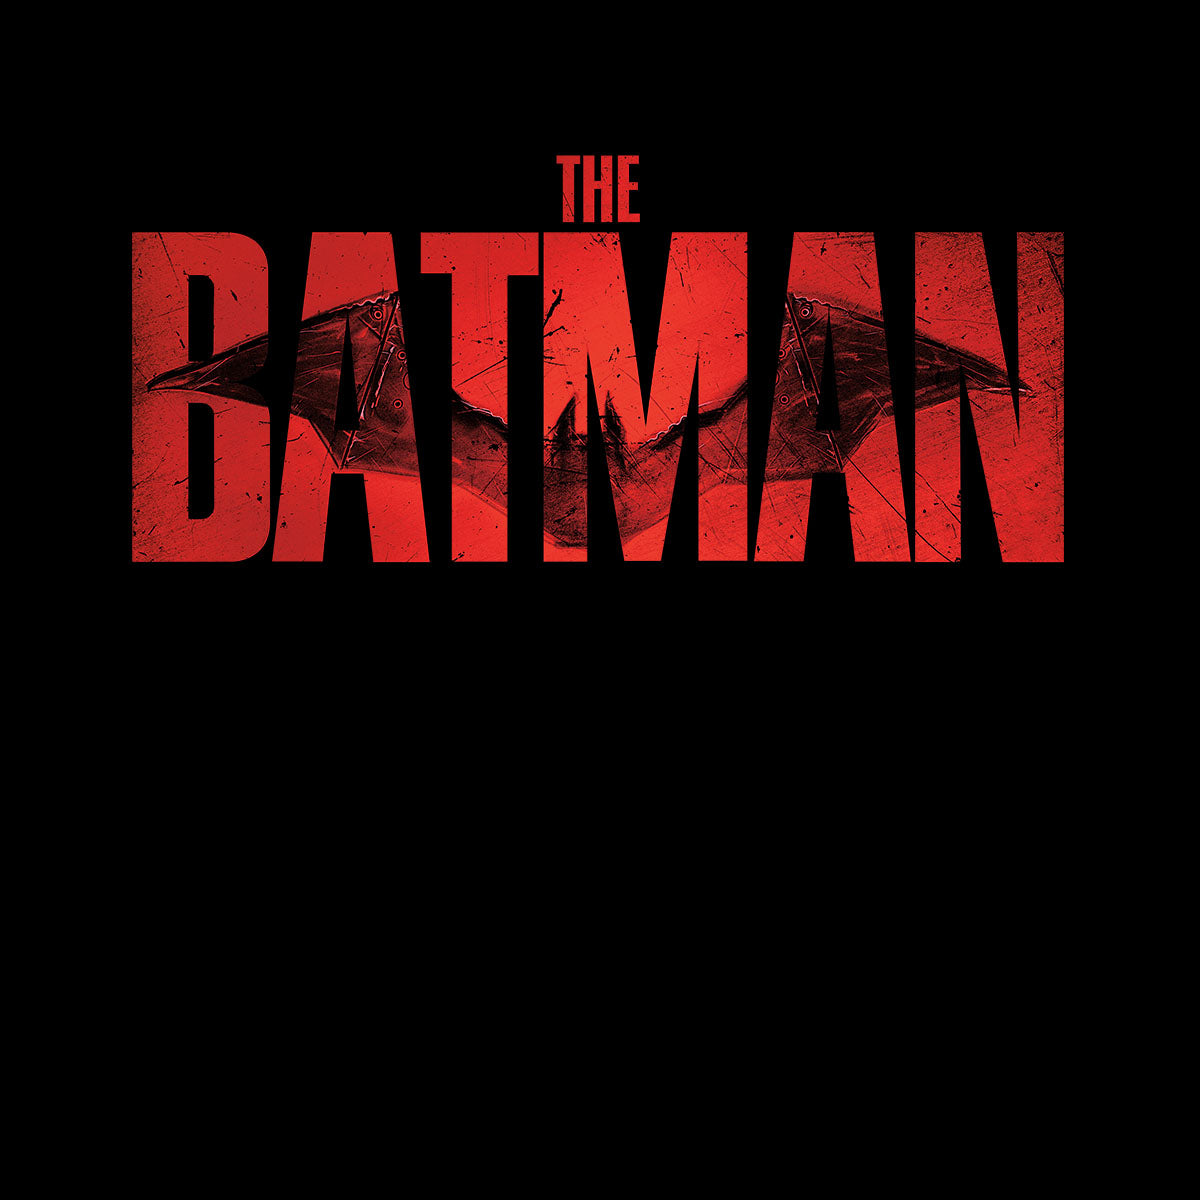 The Batman New Movie Kids T-shirt 2022 Riddler Bruce Wayne Superheroes Batman - Kuzi Tees